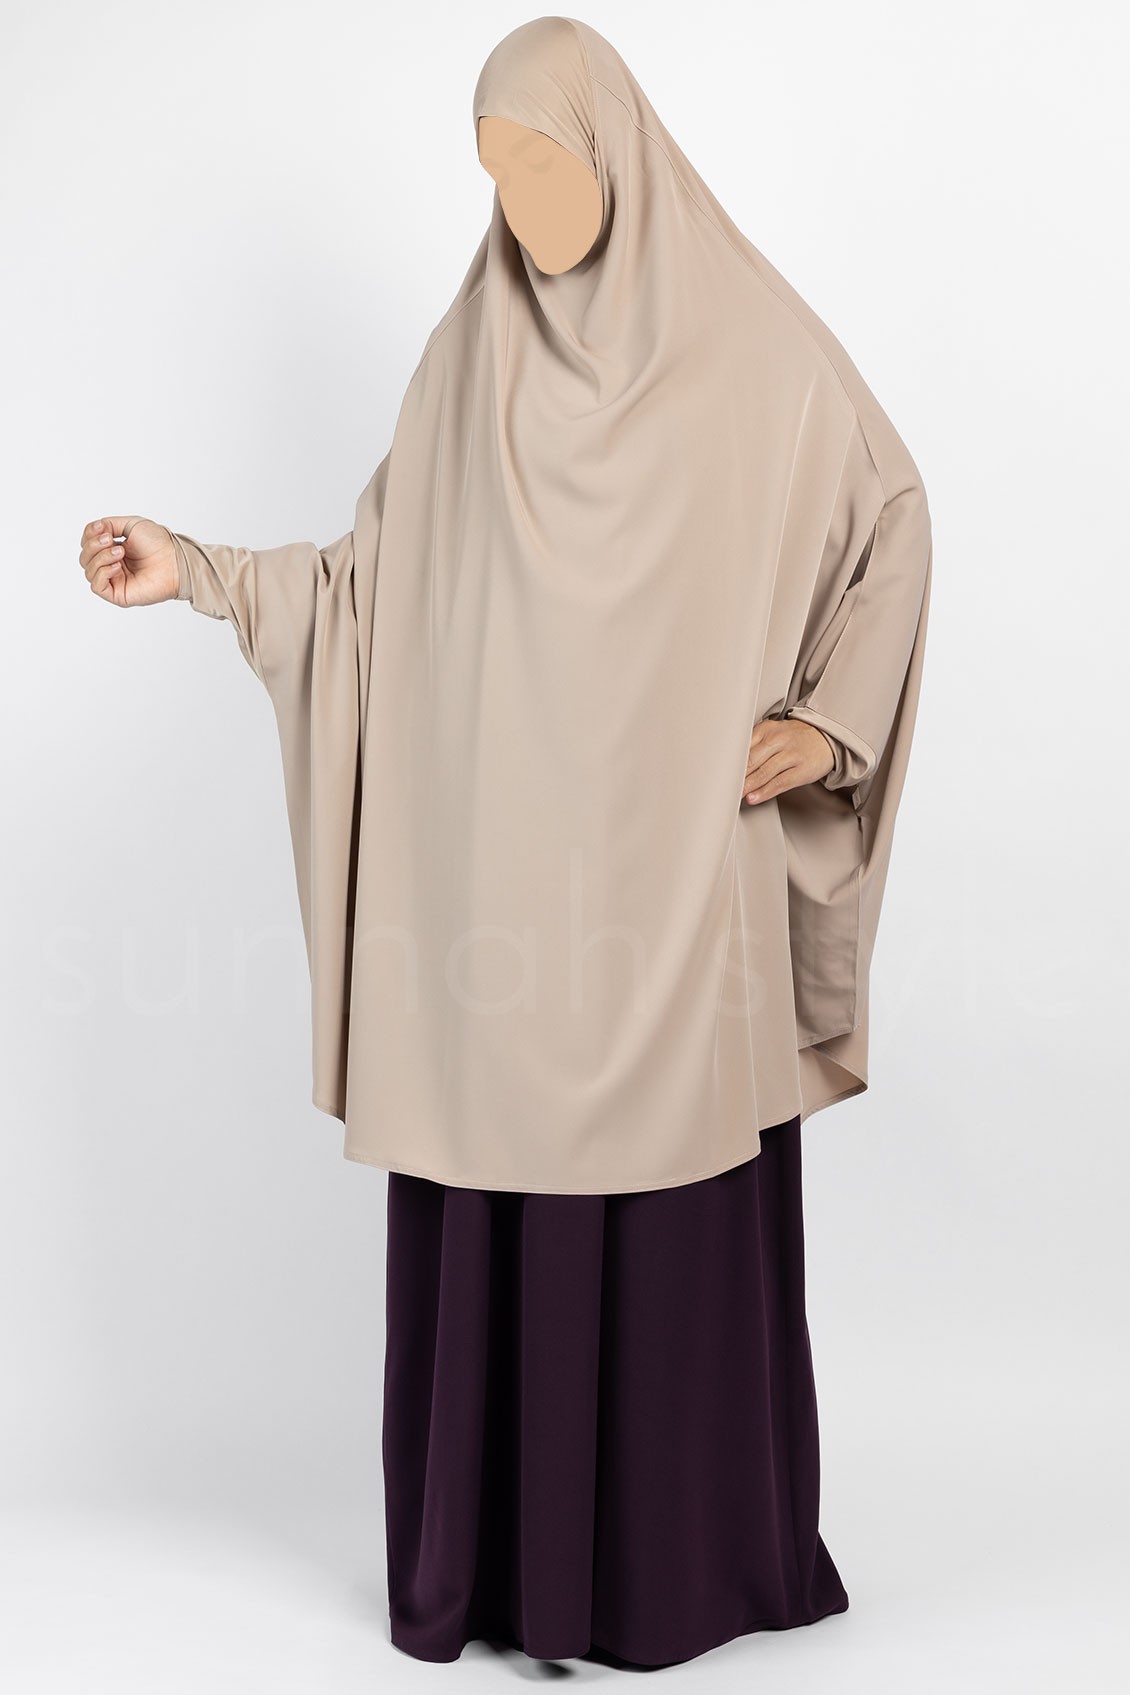 Sunnah Style Signature Jilbab Top Knee Length Sahara